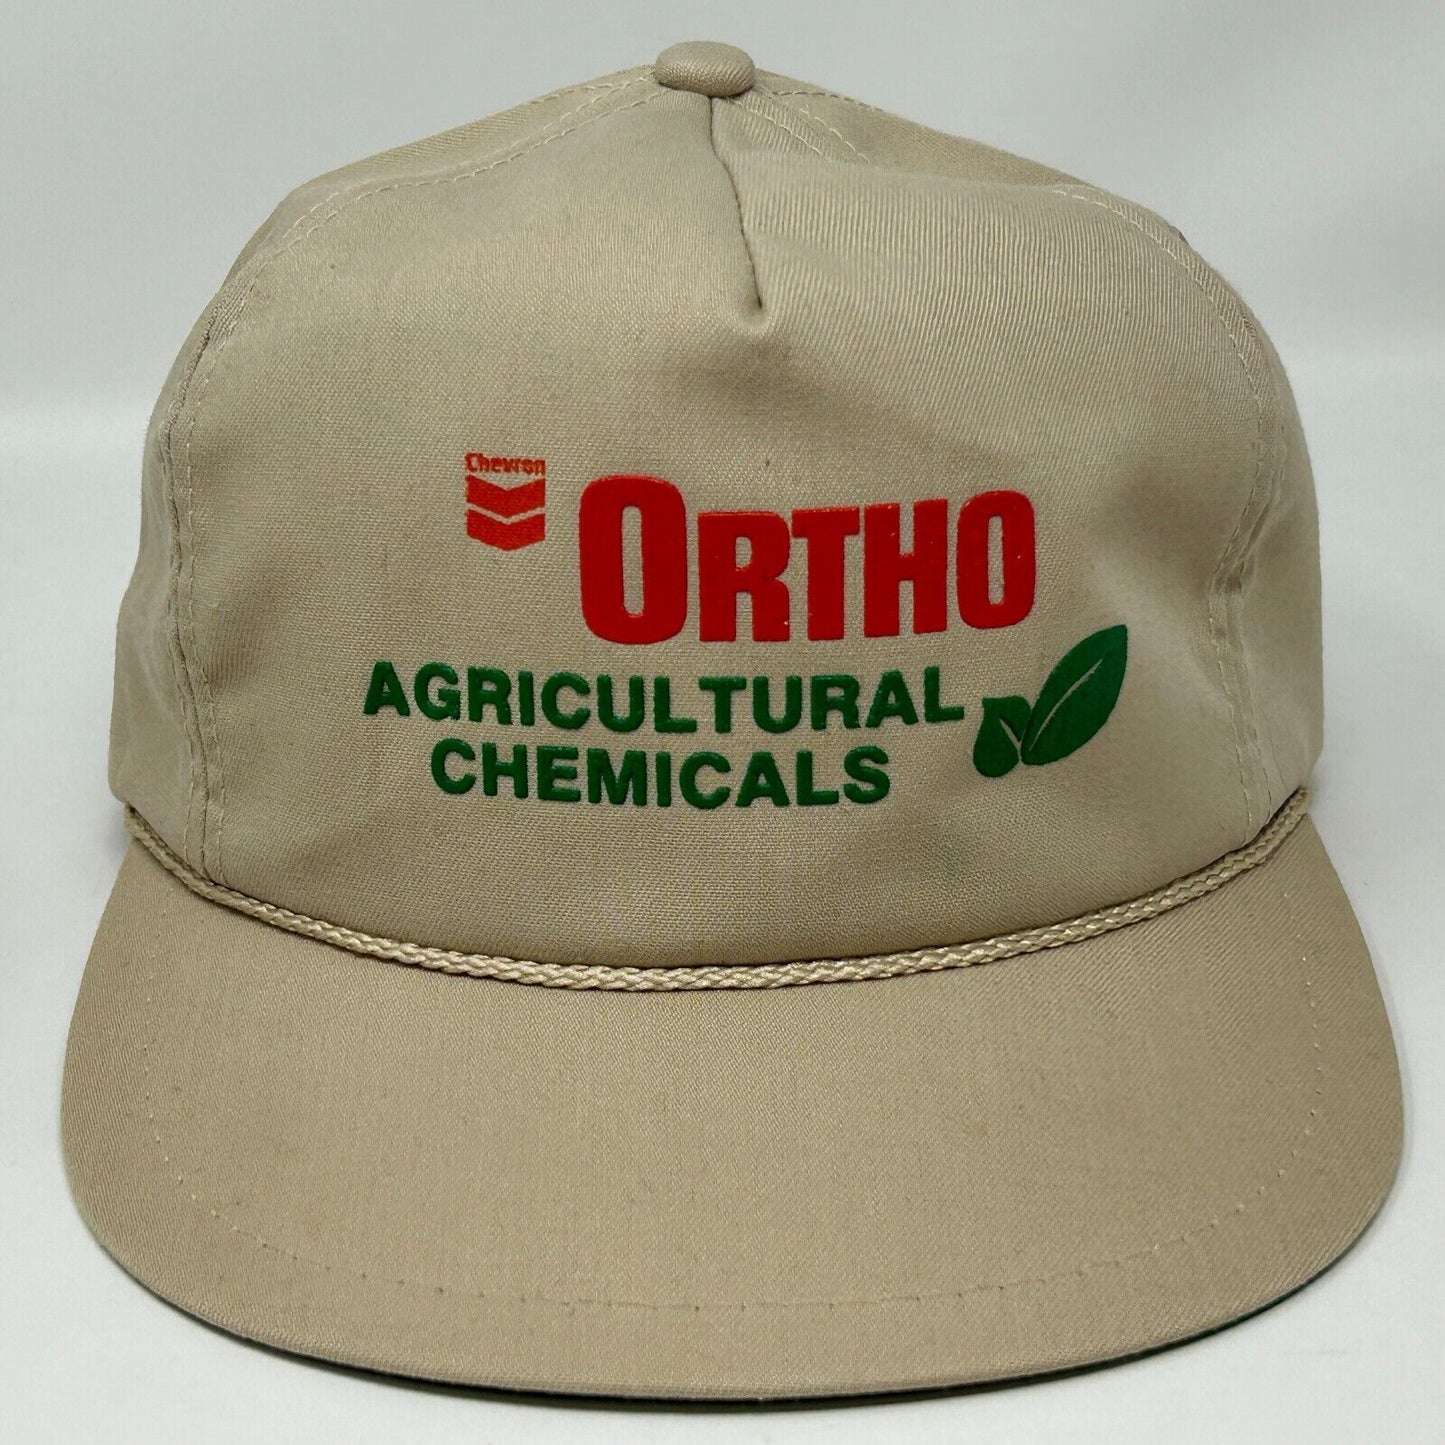 Chevron Ortho Agricultural Chemicals Hat Vintage 80s K-Brand USA Baseball Cap